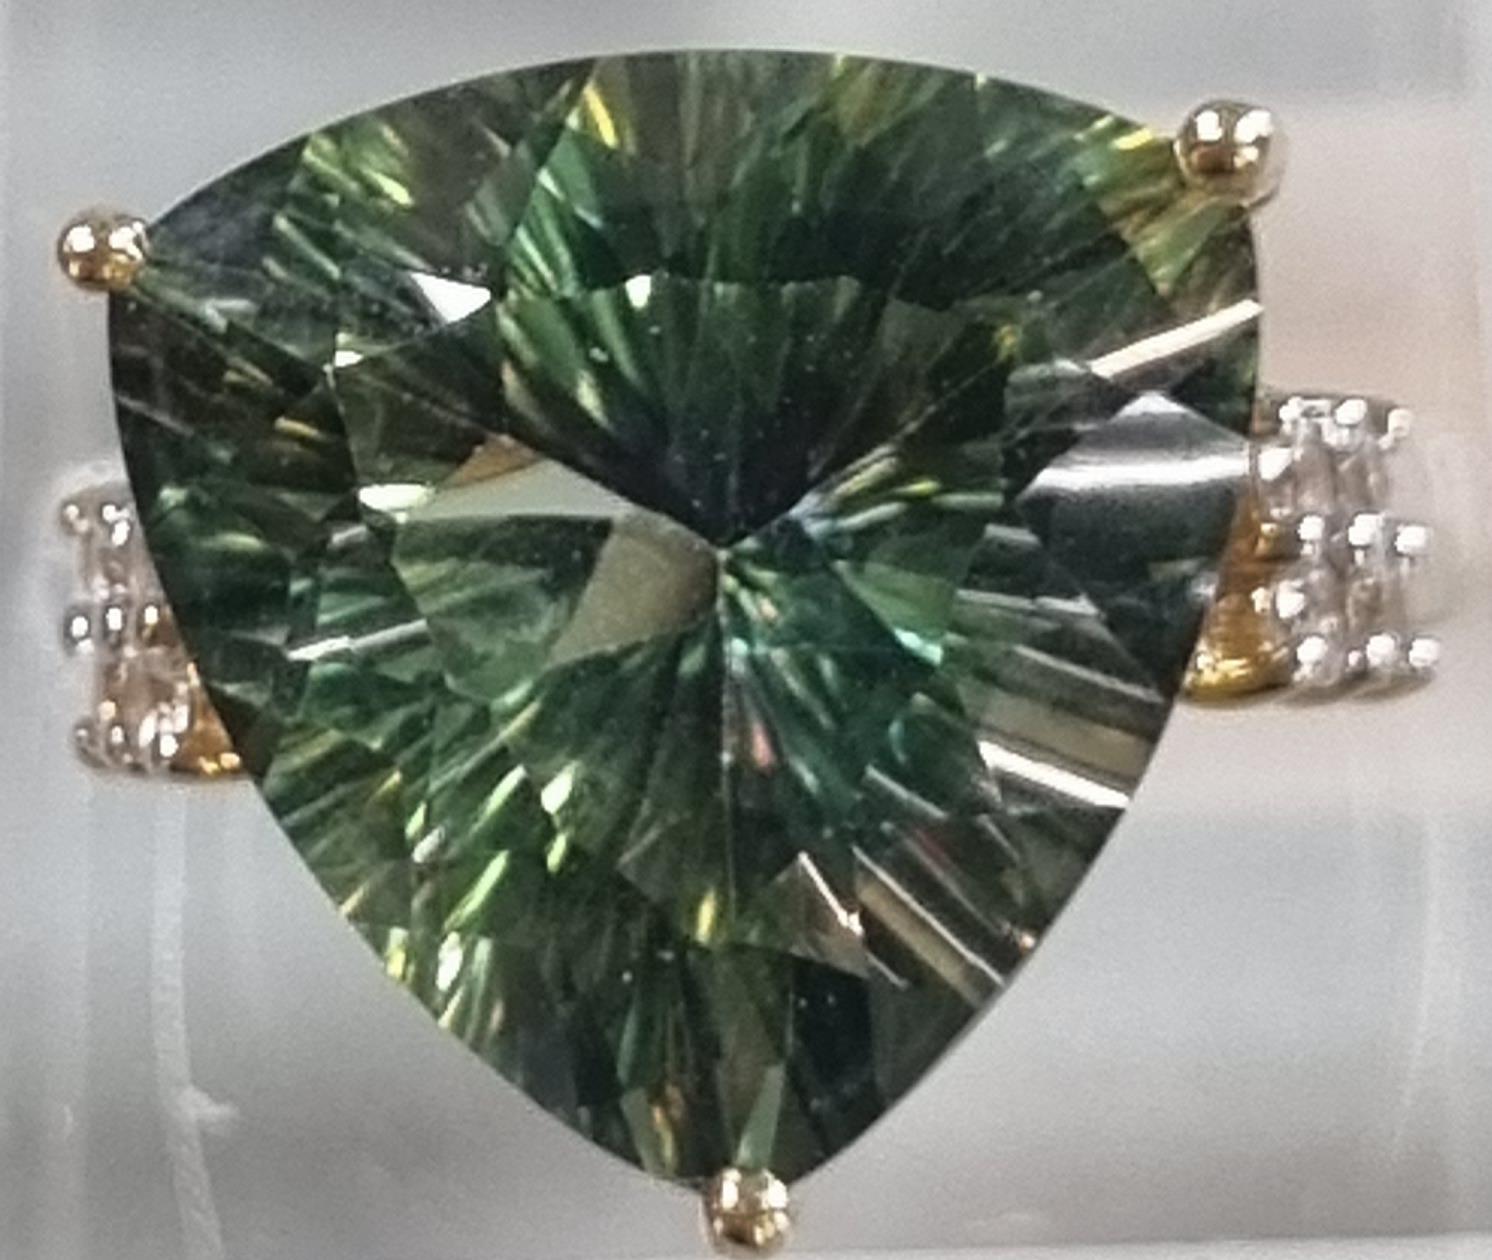 9ct gold 'Kiwi' green topaz and white sapphire ring. Sri Lankan origin. 14.275 carat weight. Size R. - Image 2 of 5